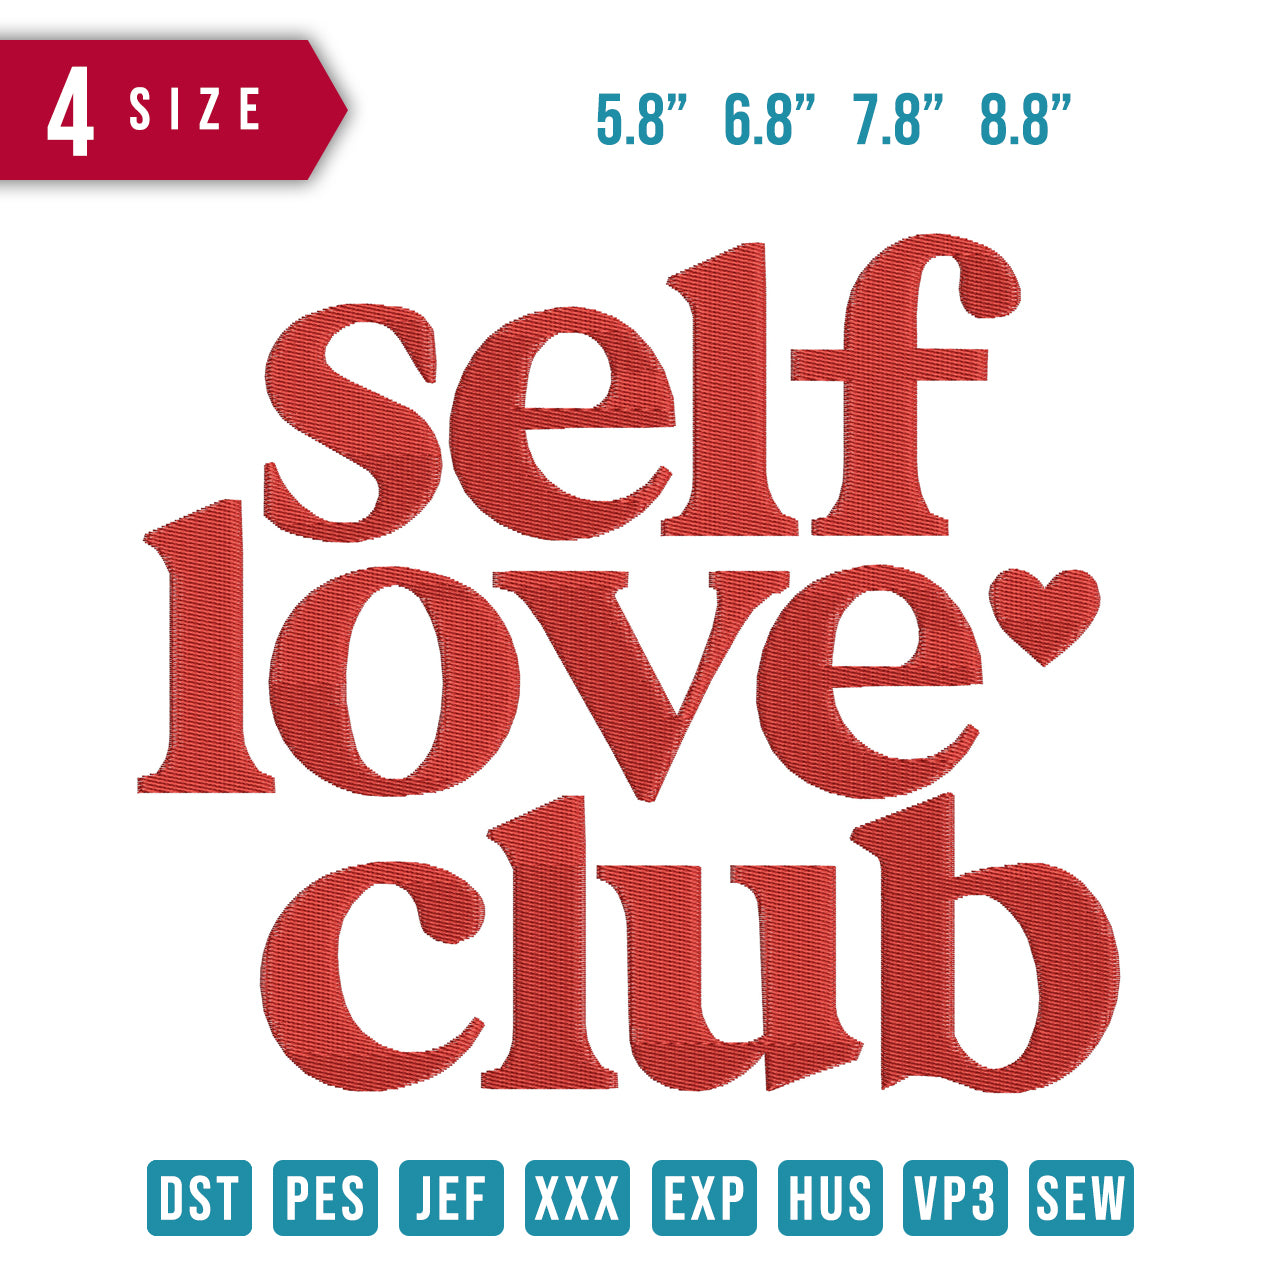 Self love club Big